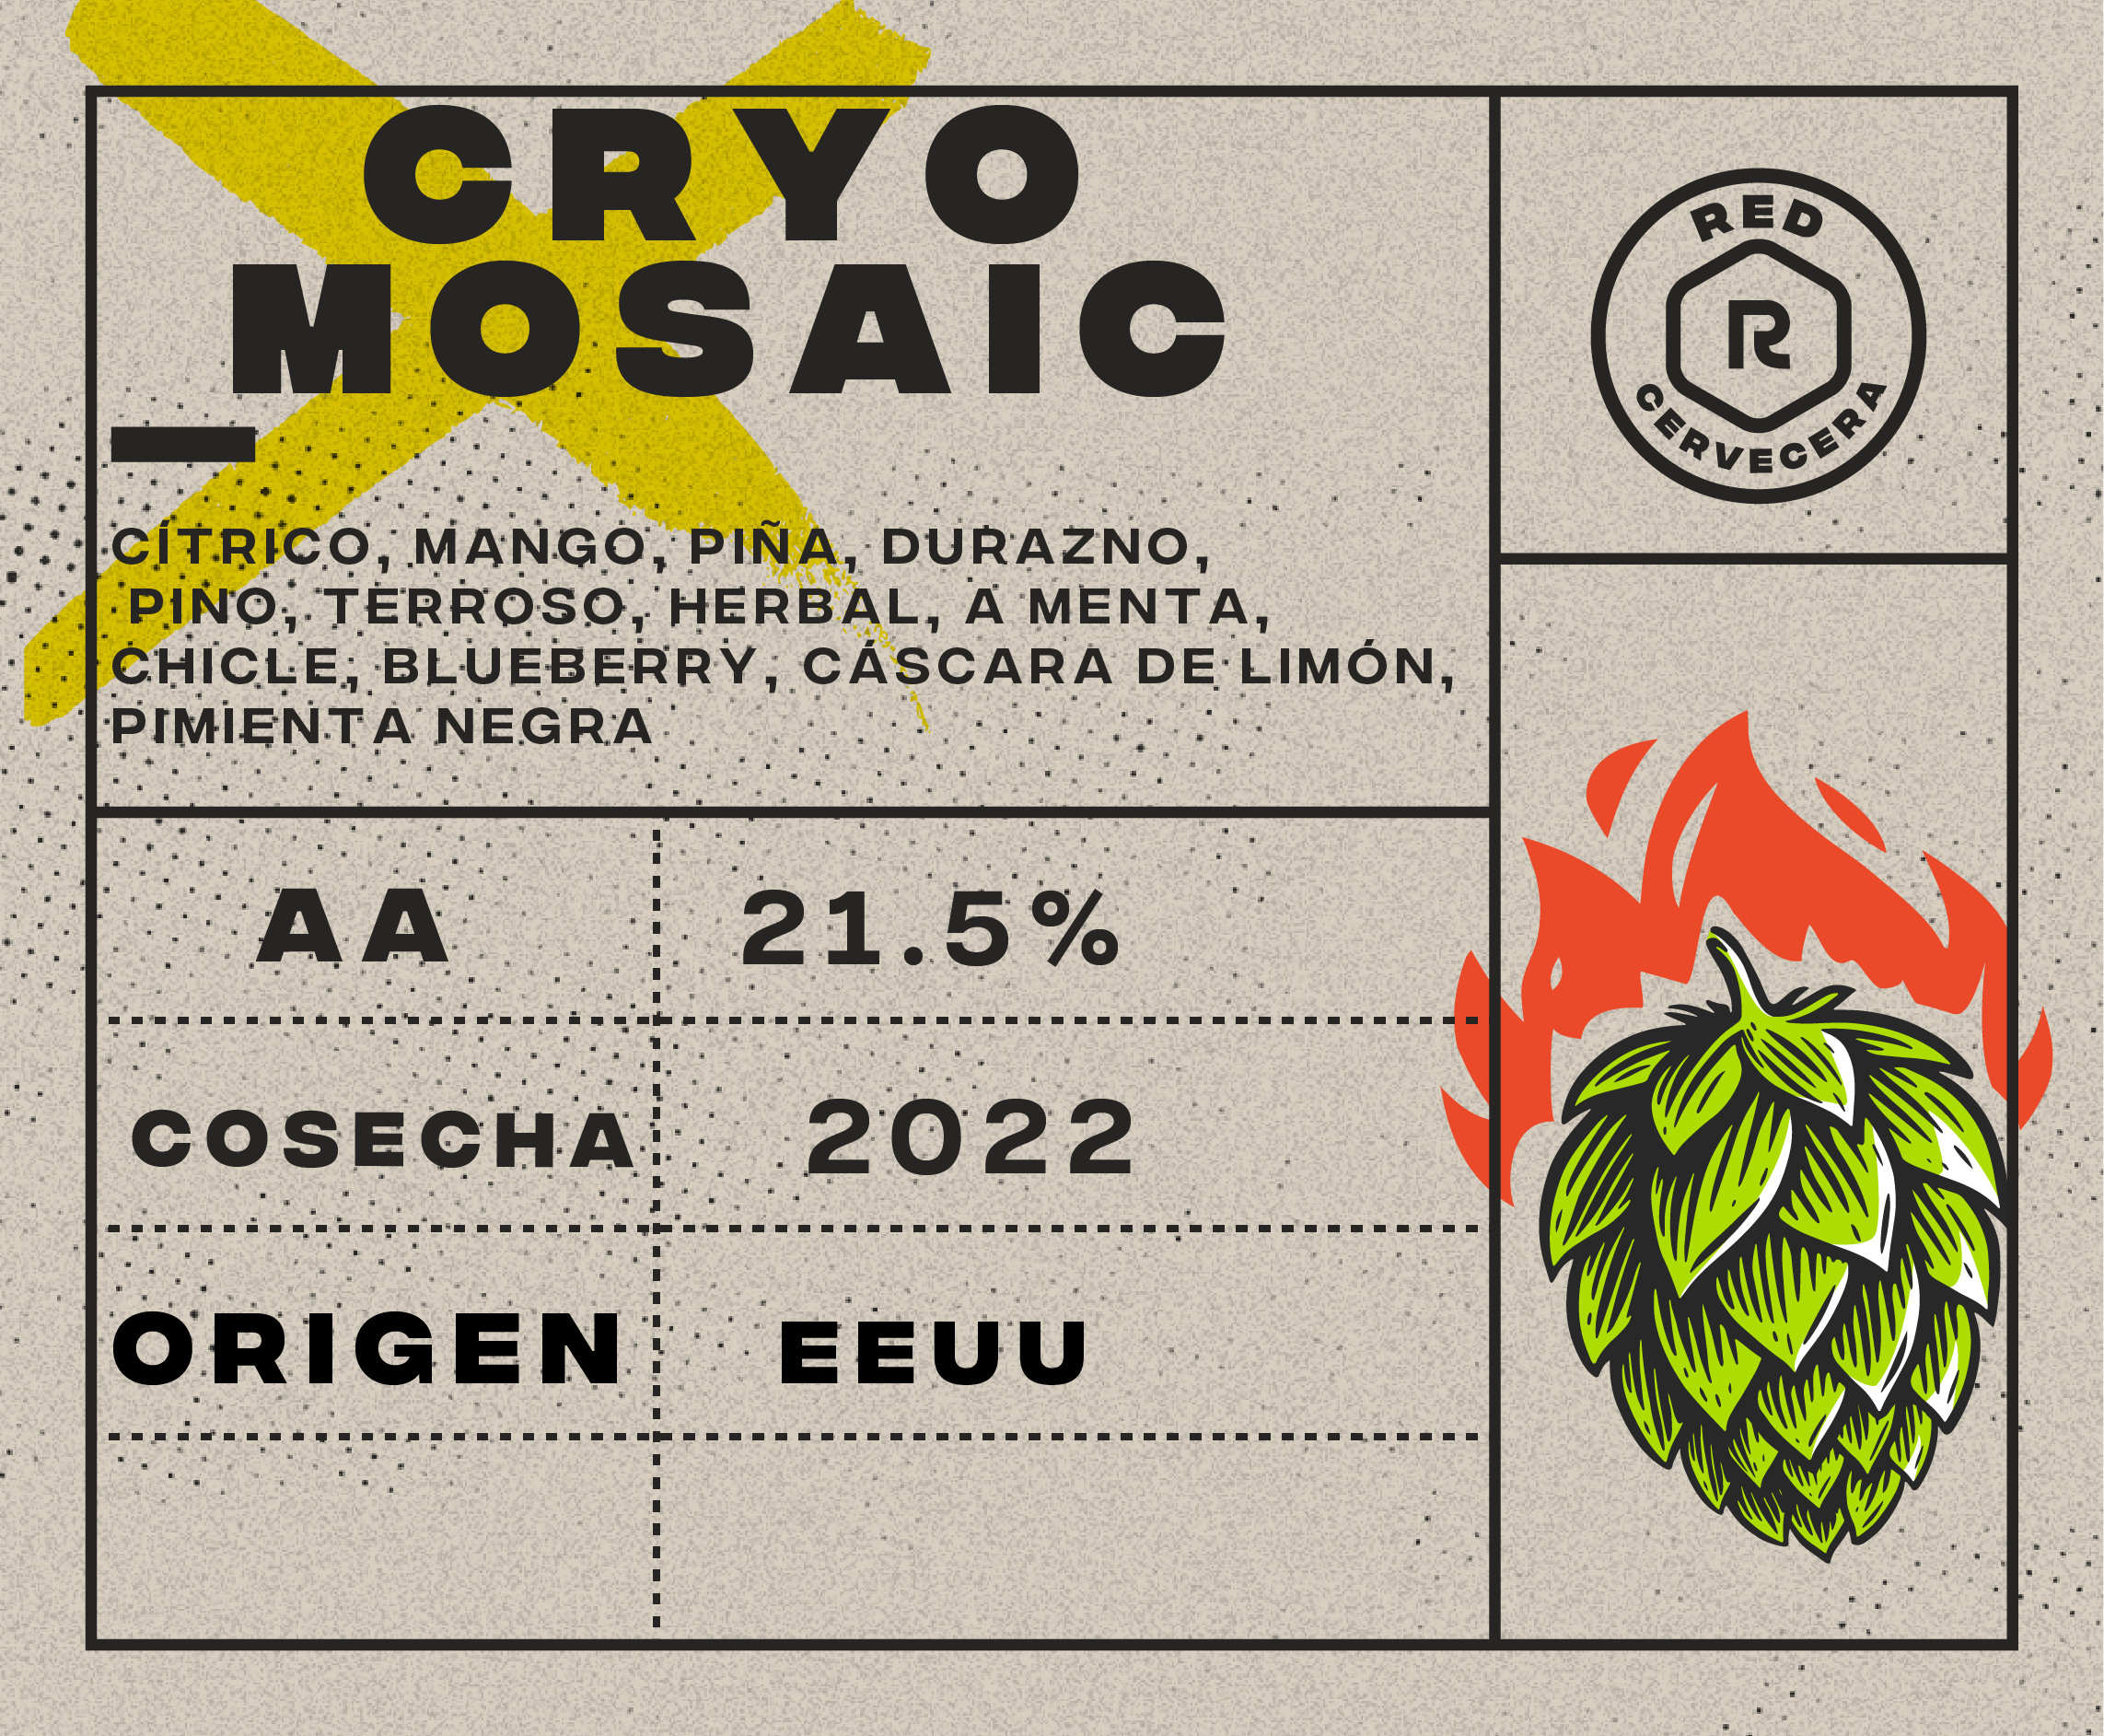 Mosaic Cryo Hops 21.5%AA (1g.)